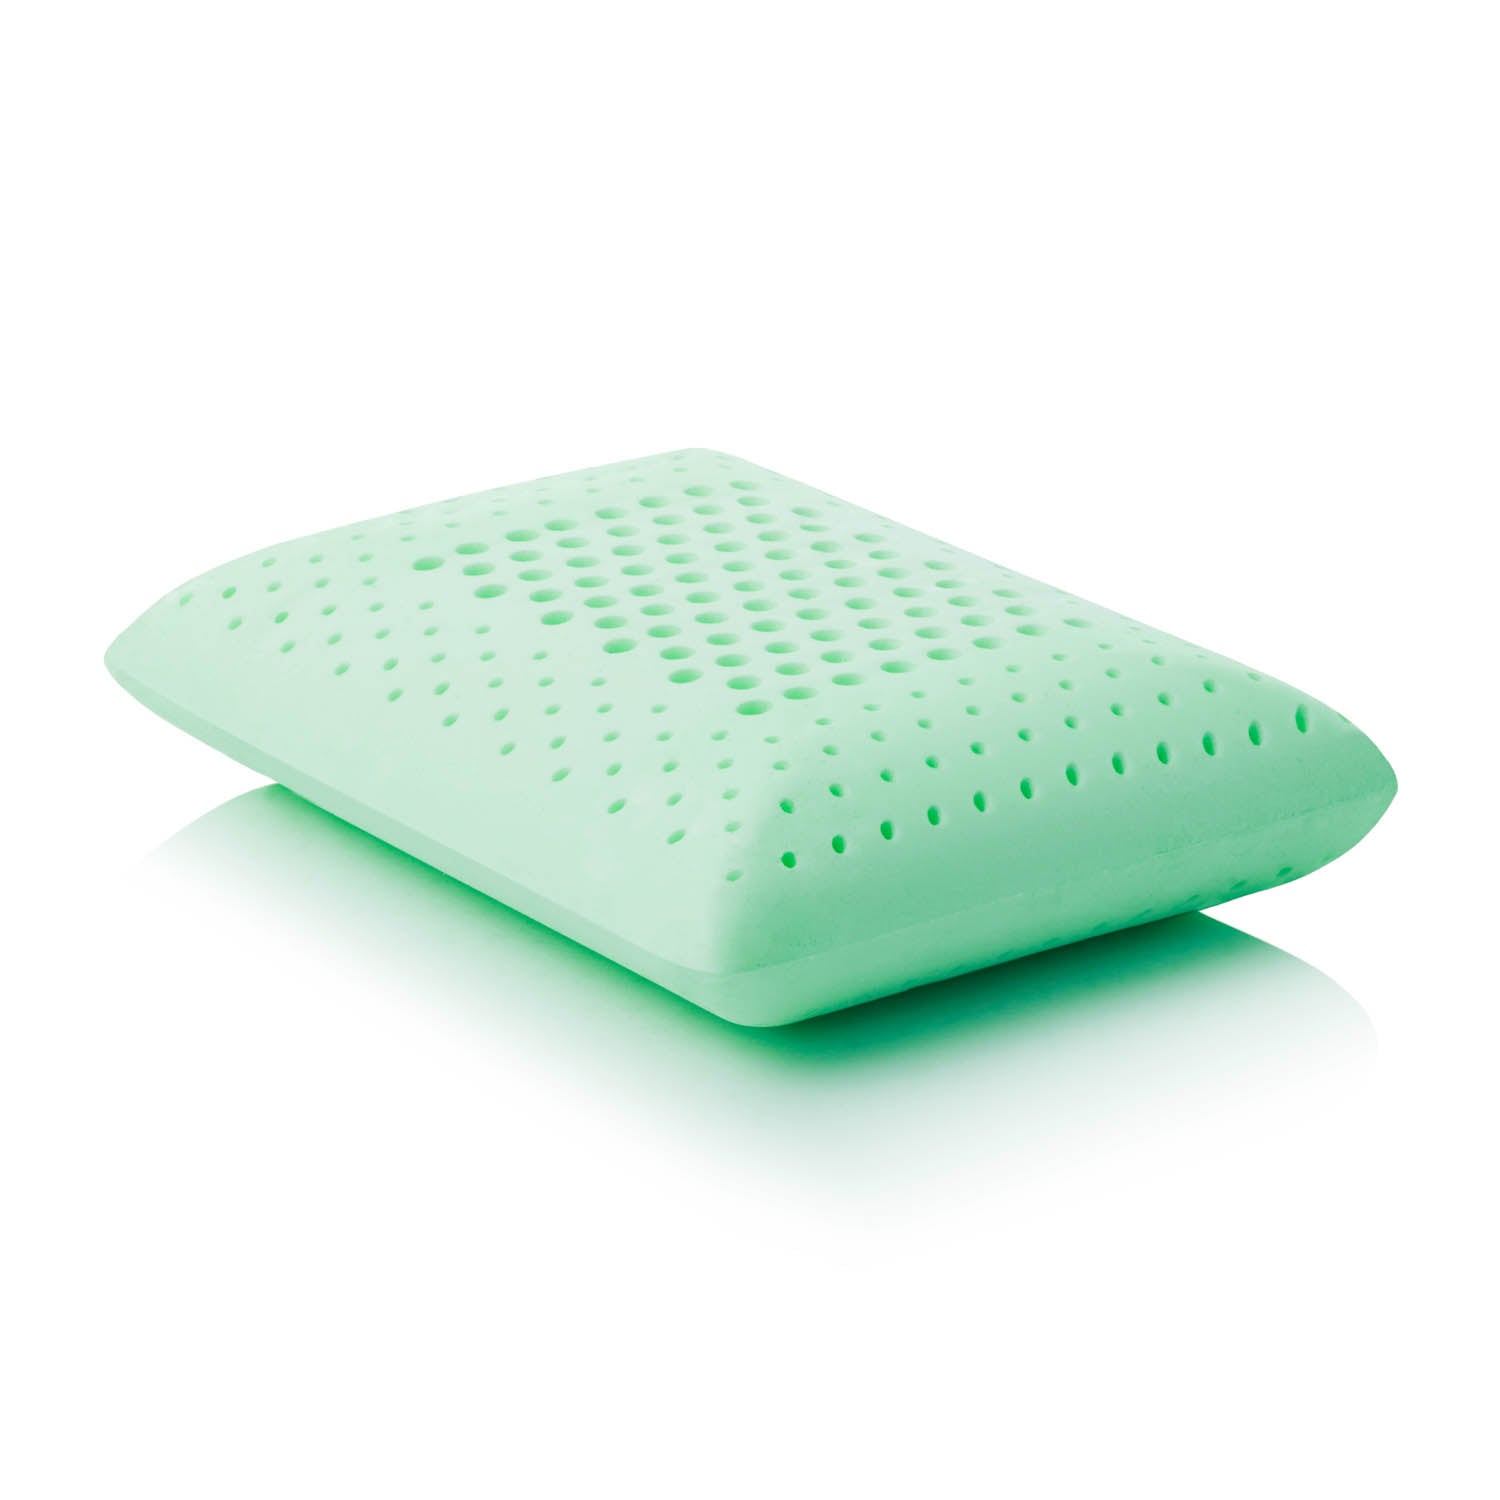 Aromatherapy Travel Zoned Dough Pillow - Ultimate Comfort Sleep